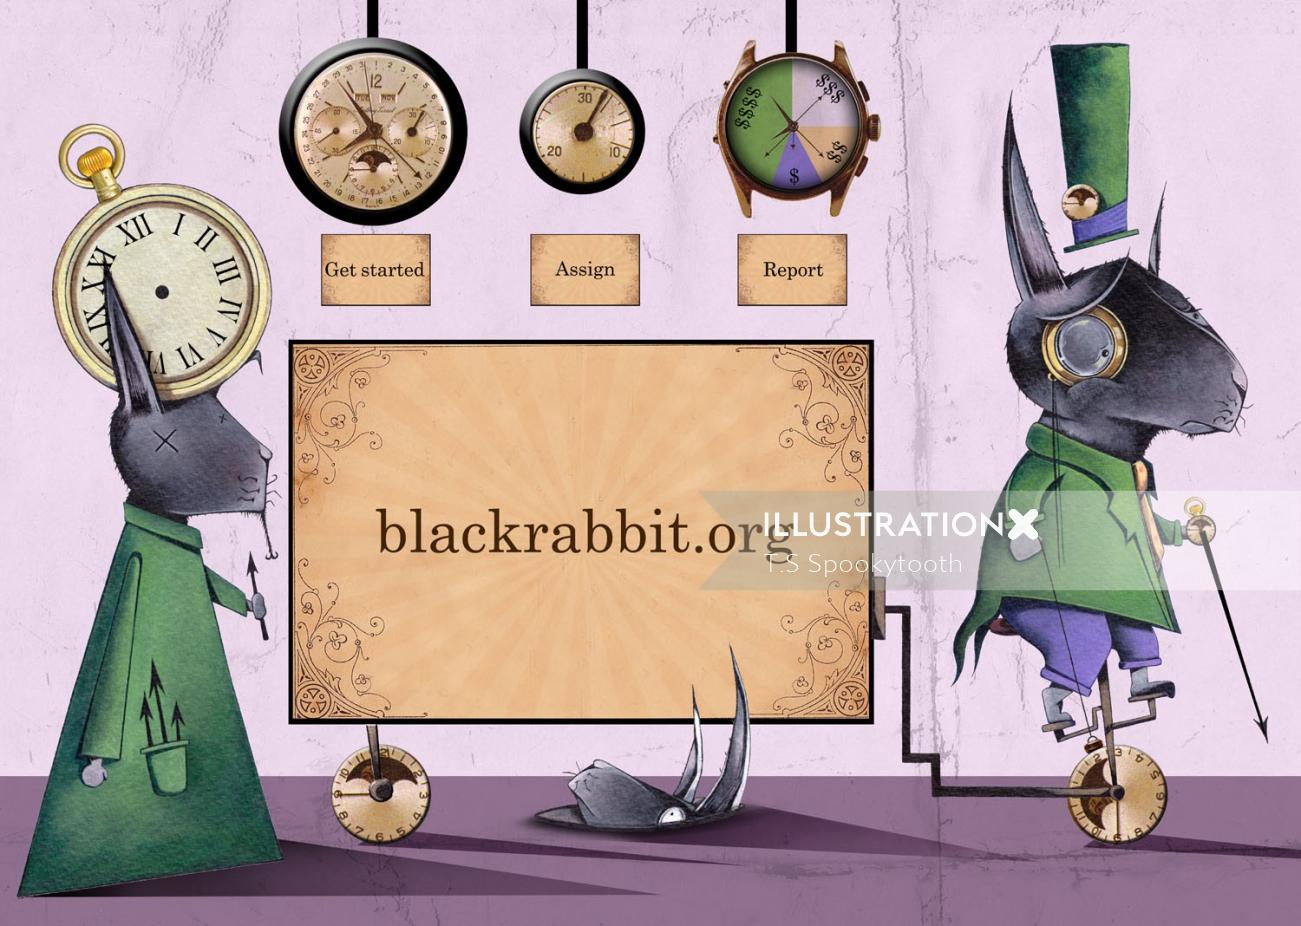 Blackrabbits website landing page illustration